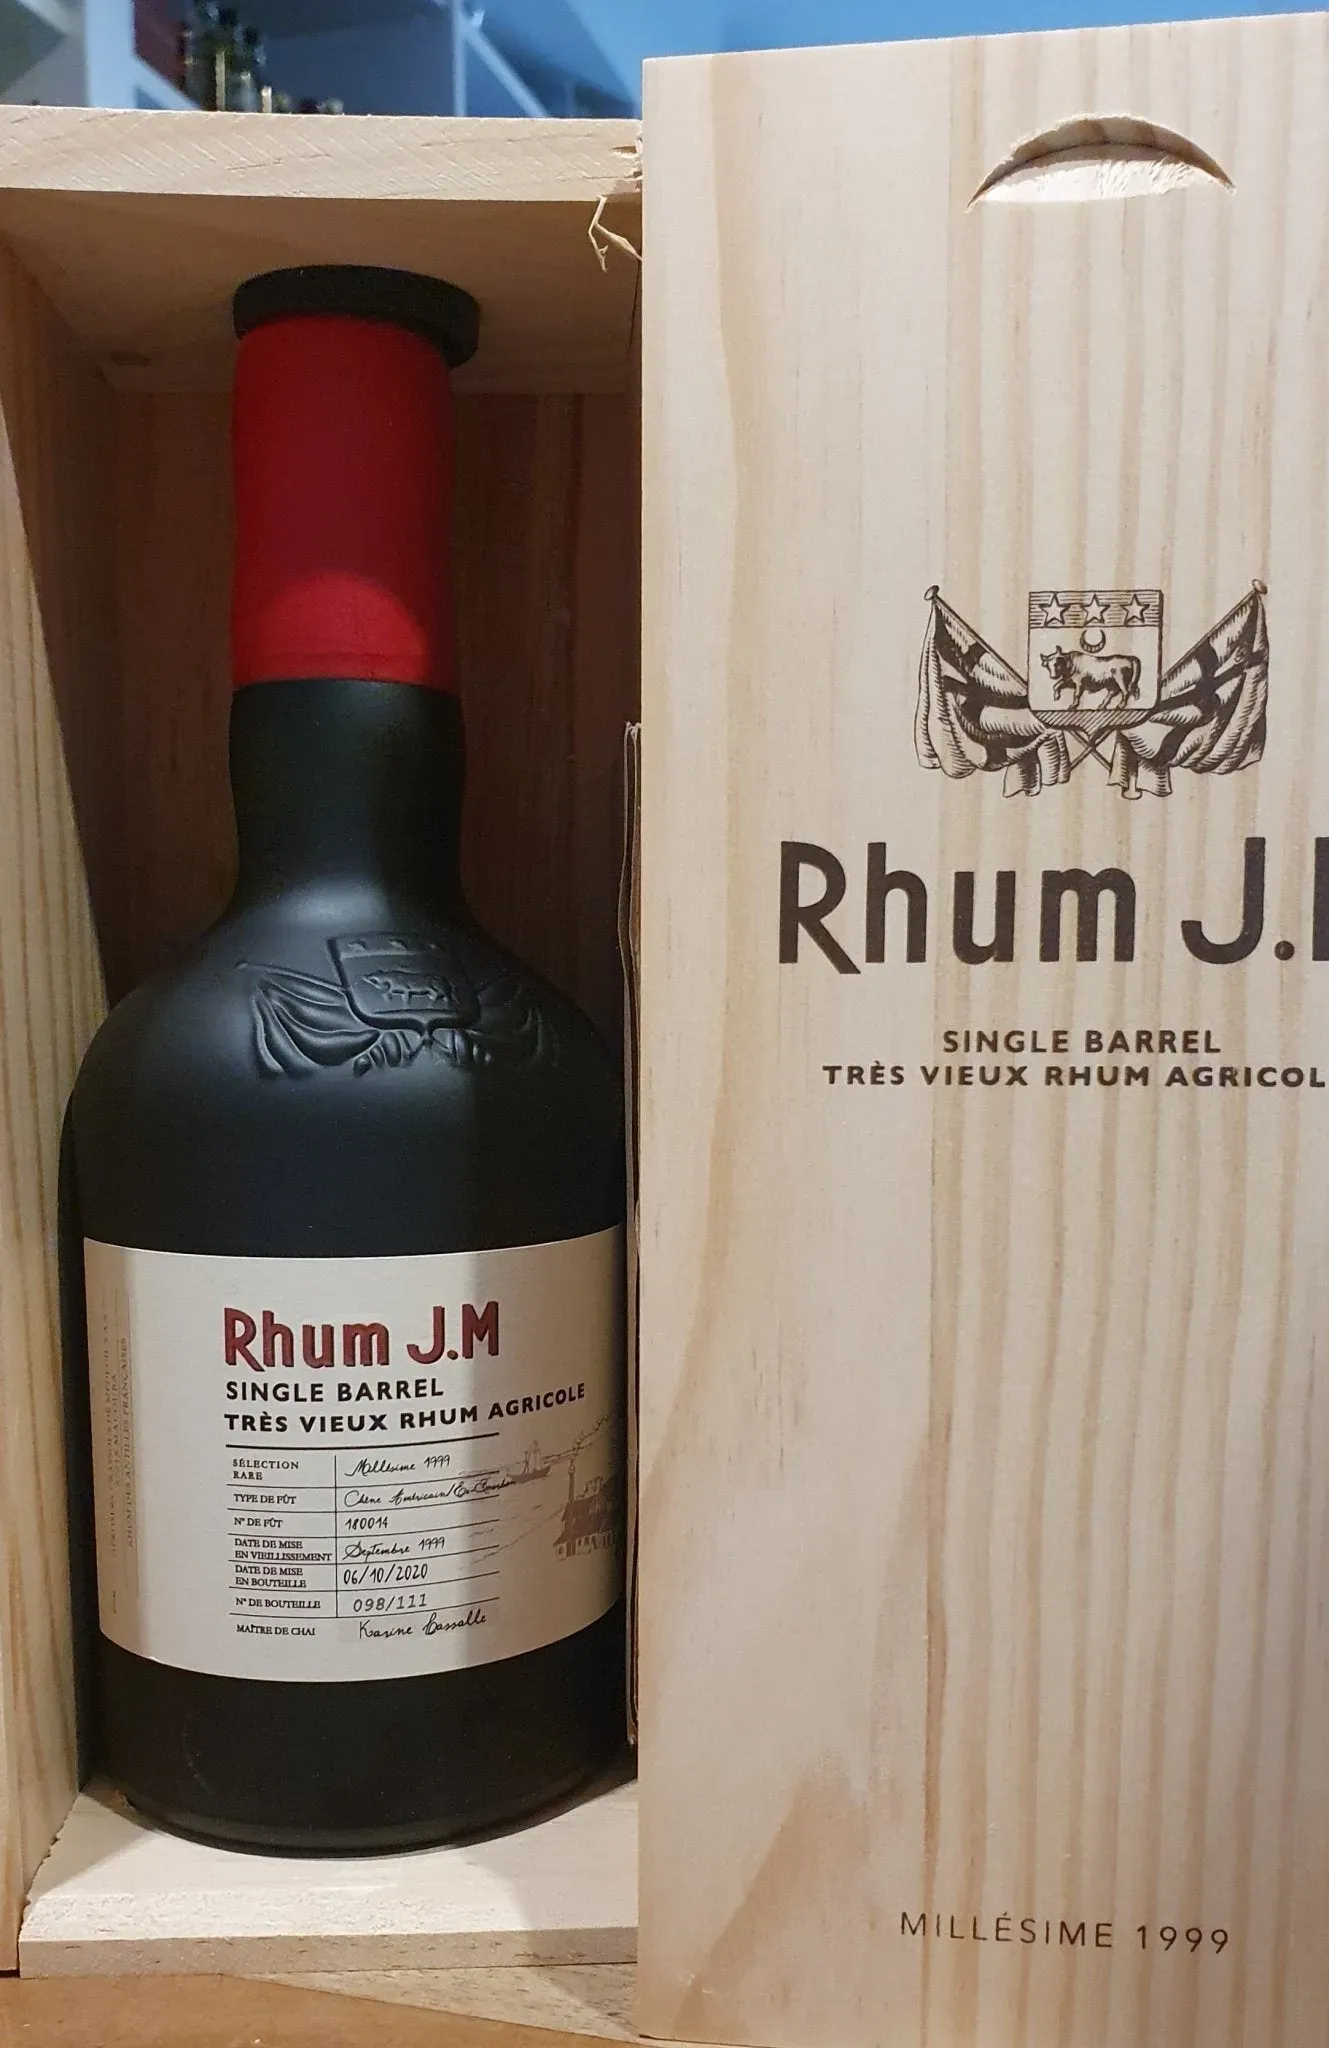 Rhum J.M Millesime 1999 2020 FUT 014 Single Barrel 42,84%vol. 0,5l single Cask #x Rum Agricole Martinique